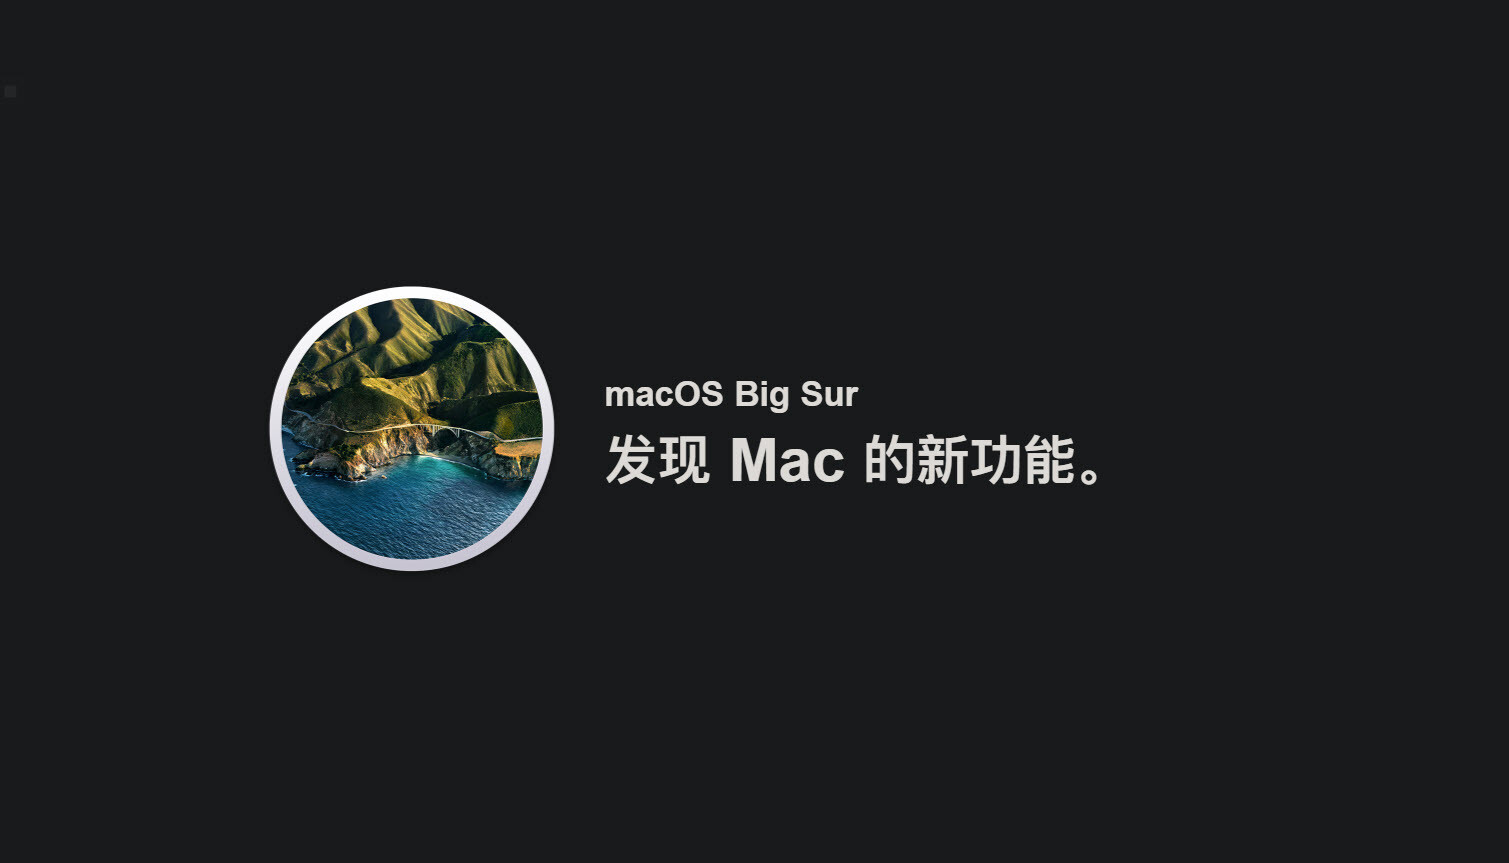  macOS Big Sur 正式版发布